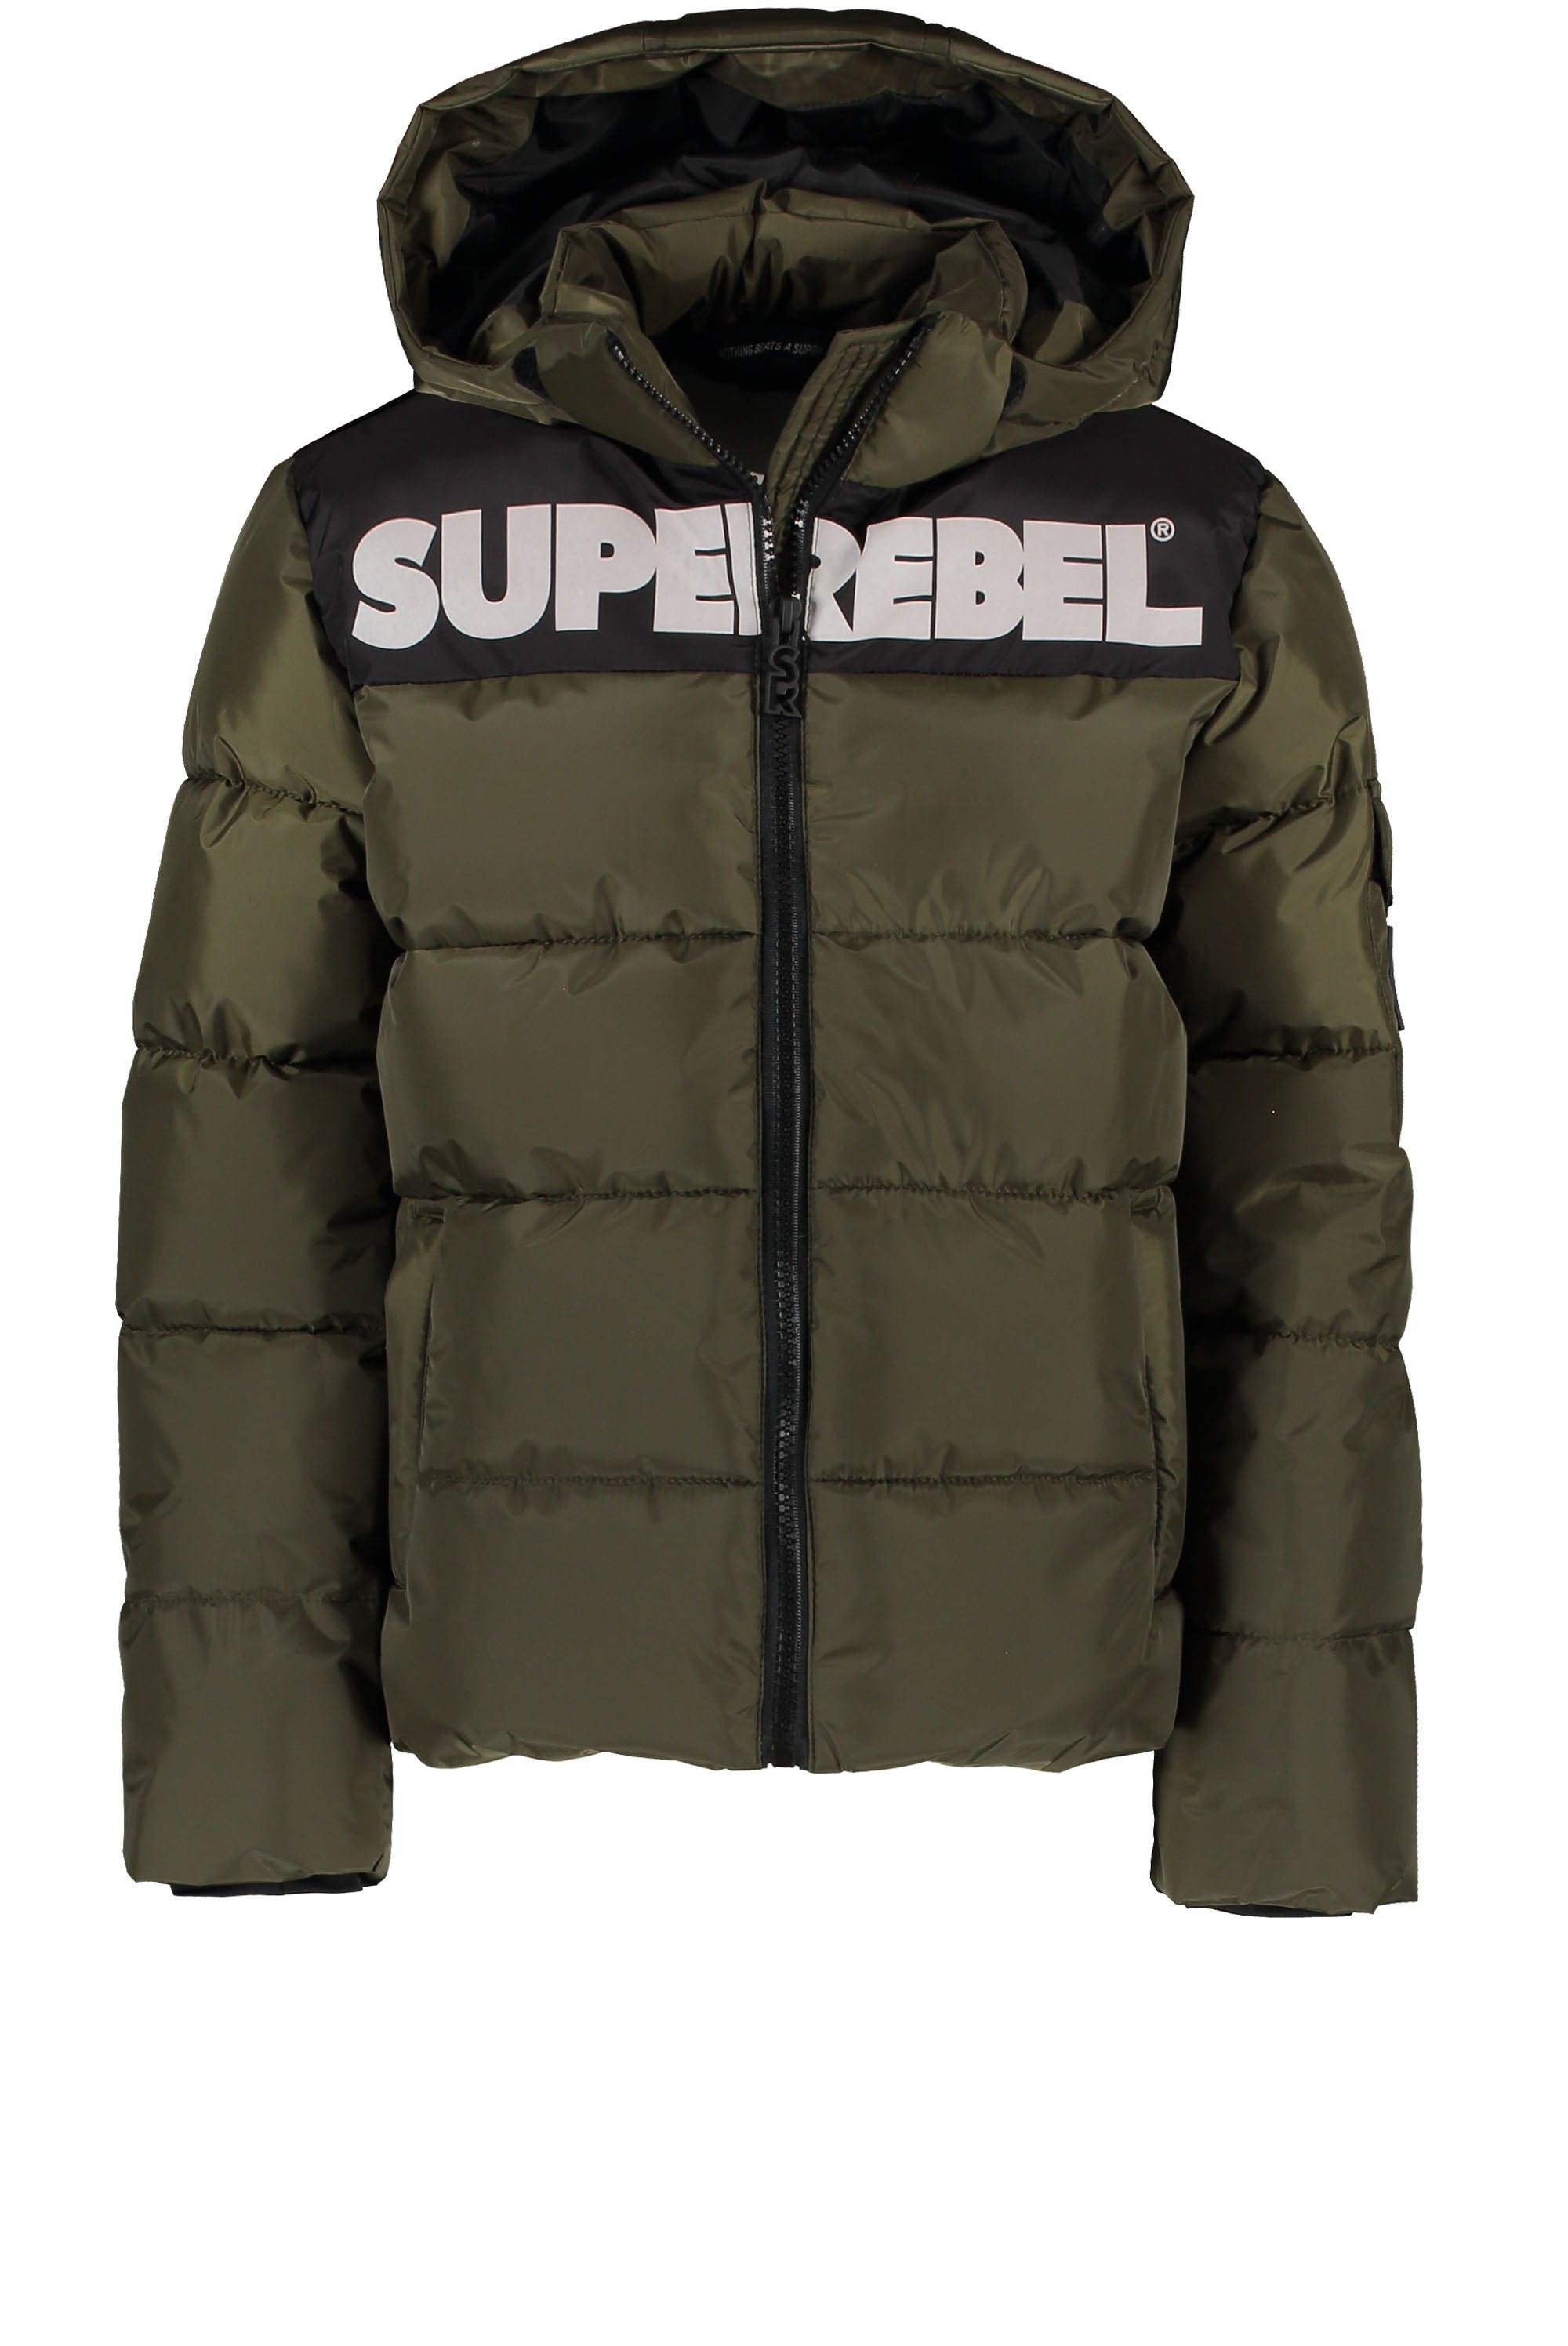 Super Rebel Winter Jacket STUNG Army